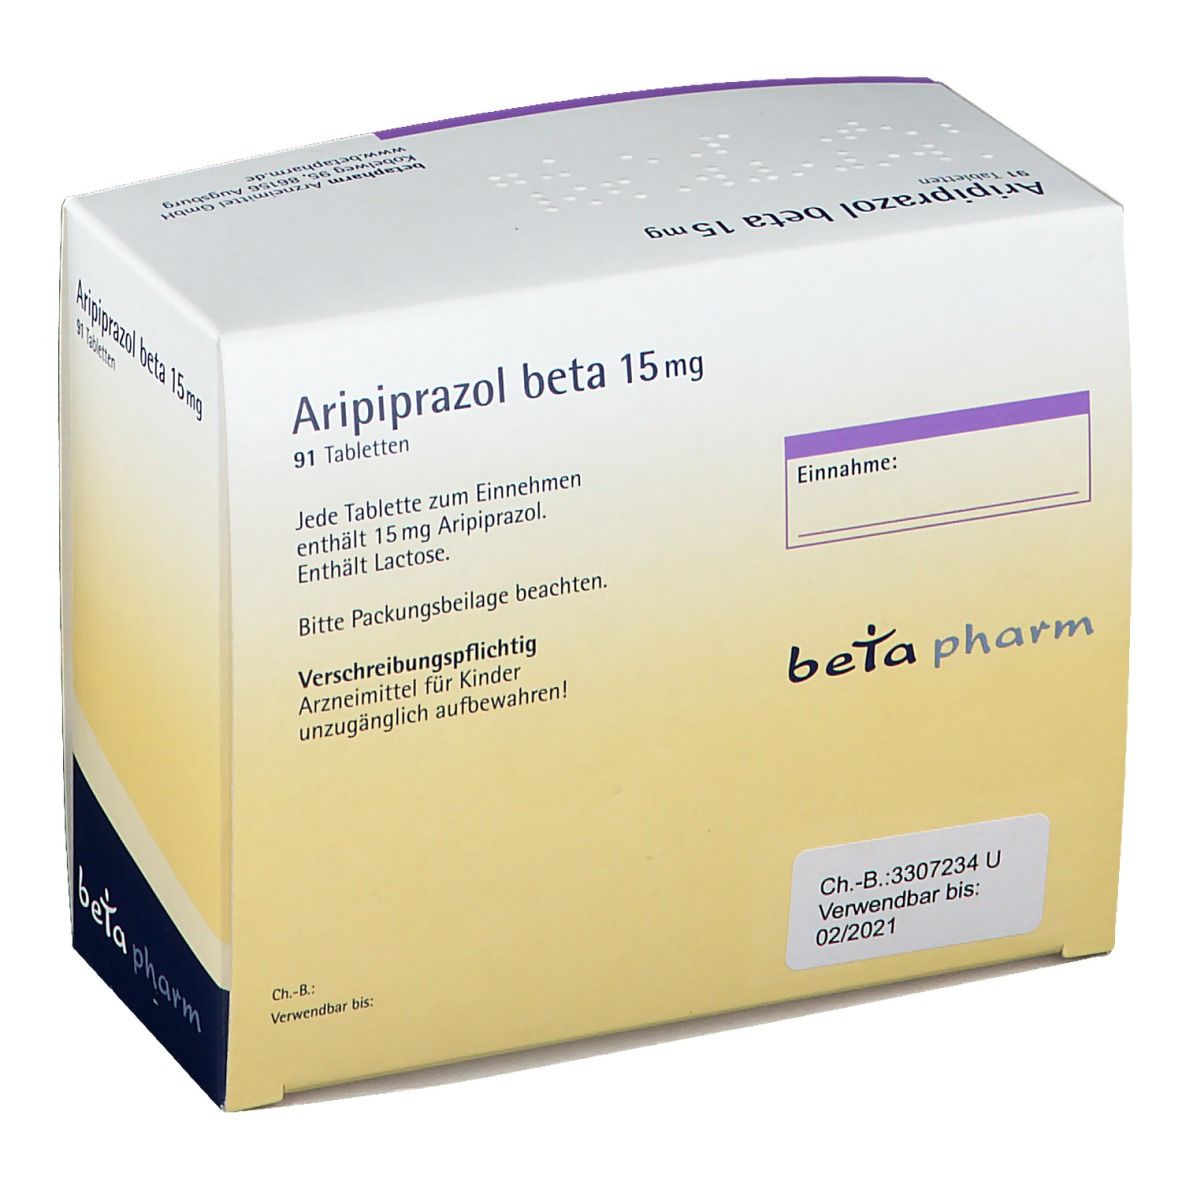 Aripiprazol beta 15 mg